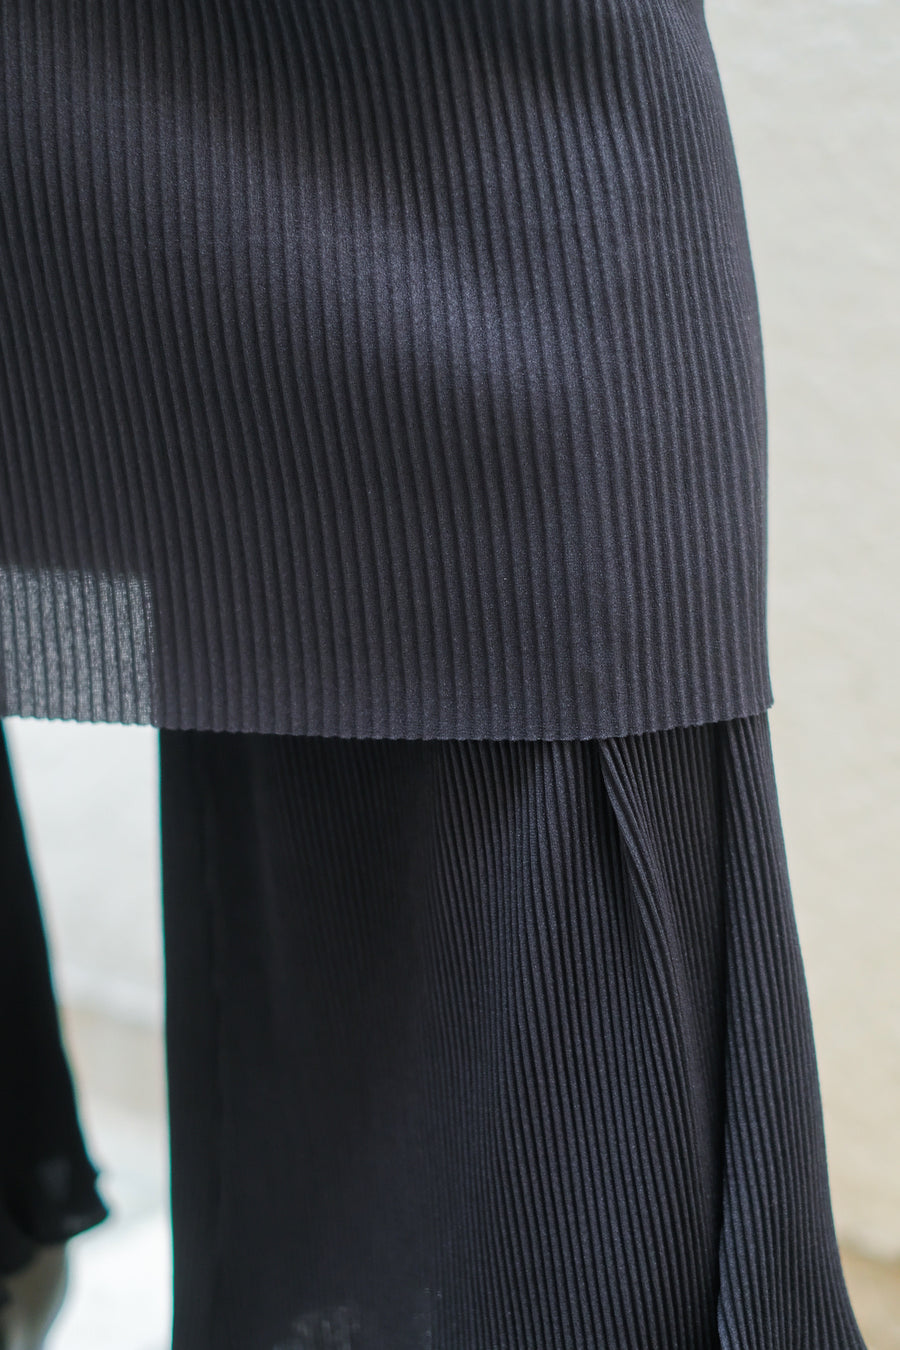 kotohayokozawa  Long sleeve dress high neck type(BLACK)